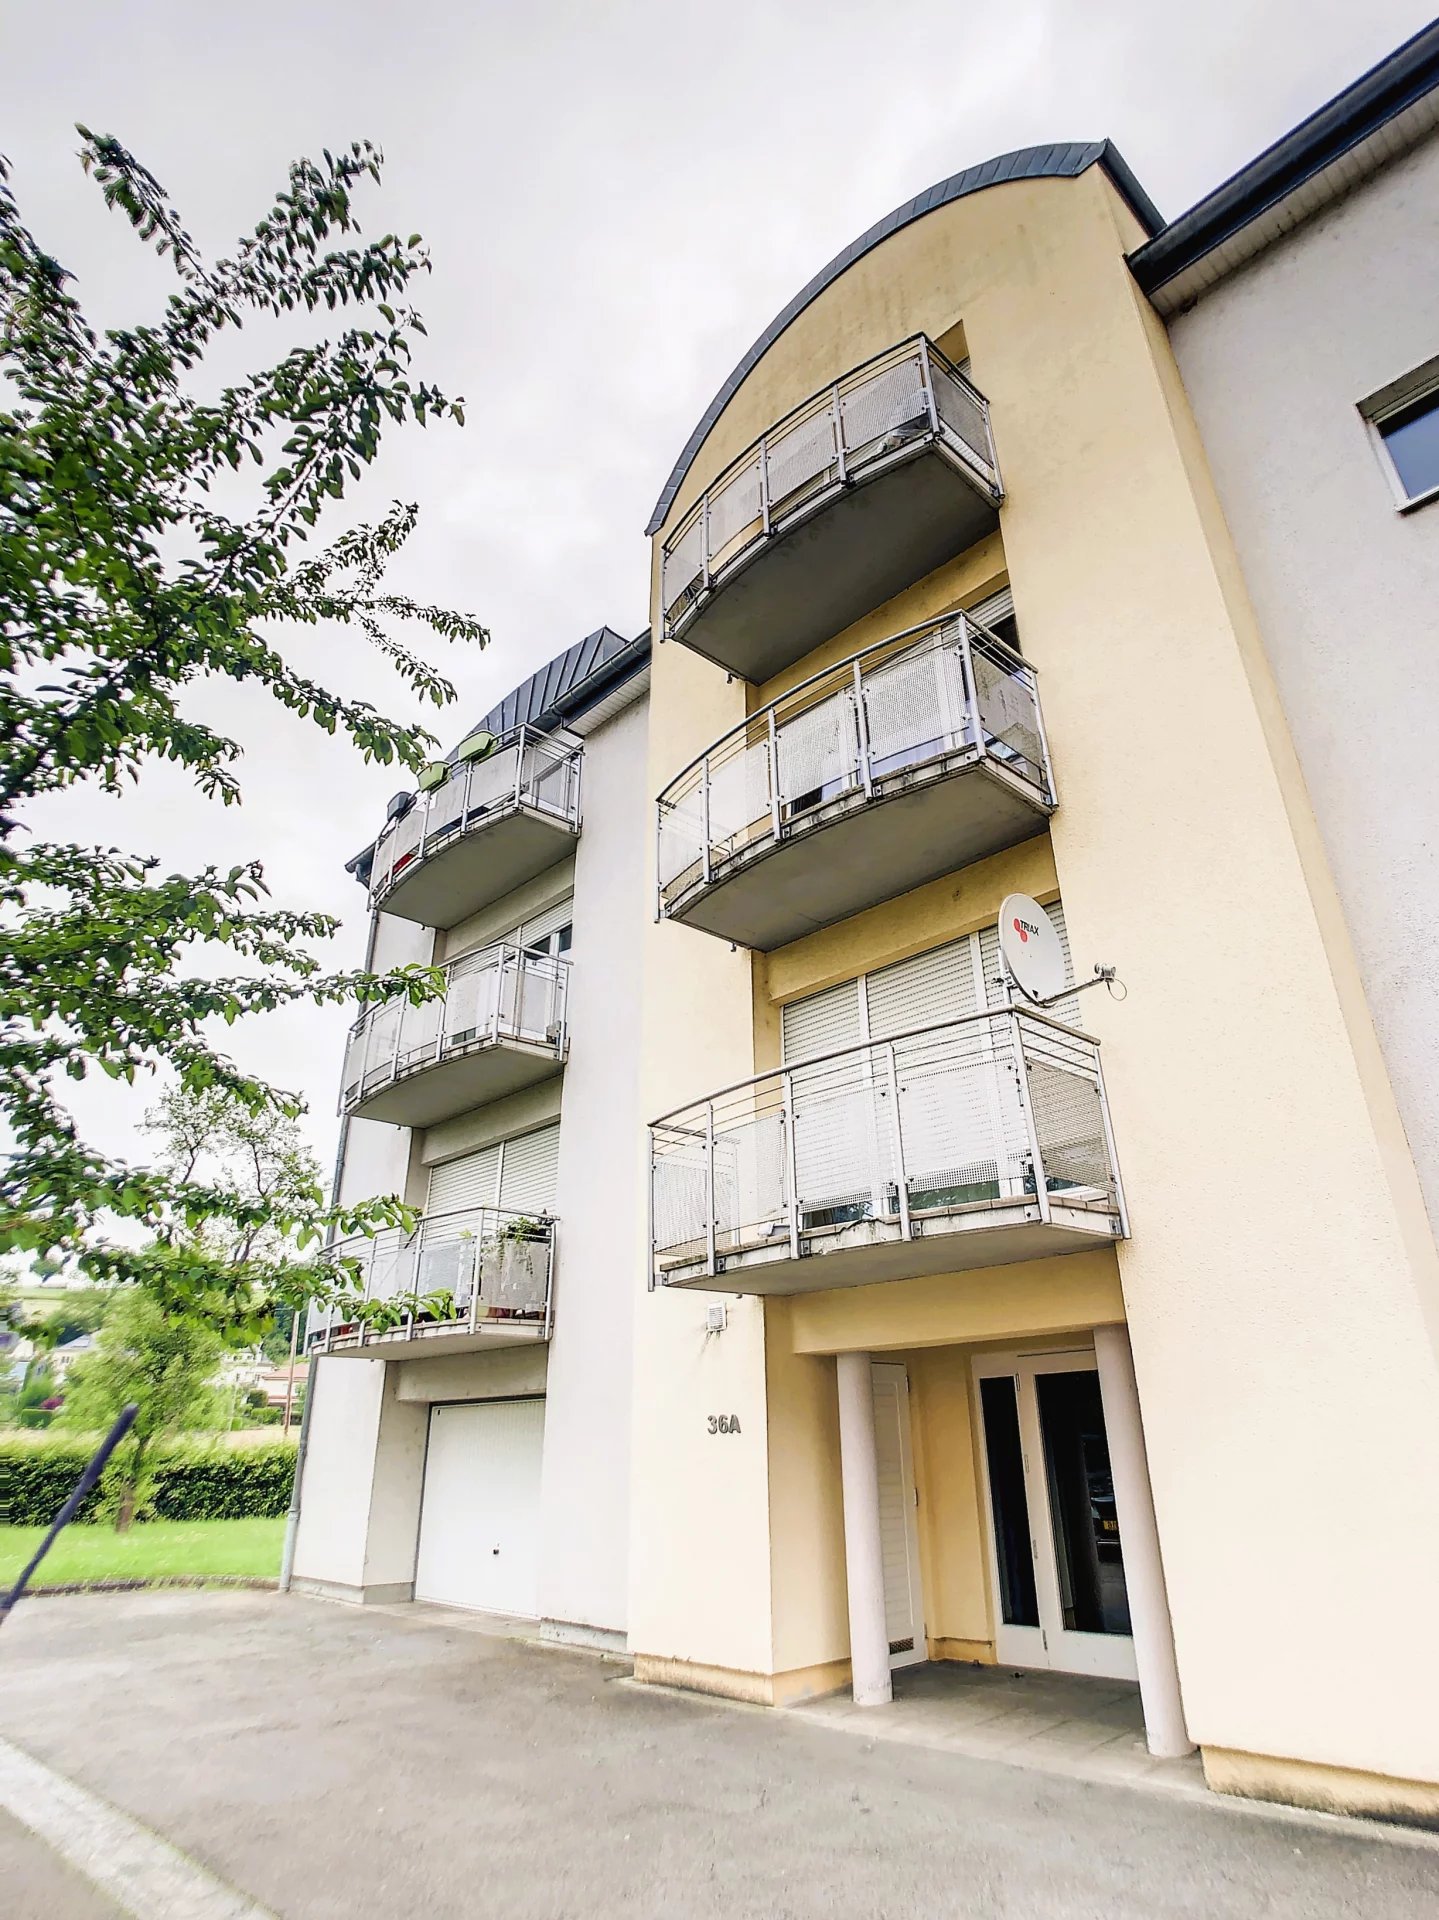 Sale Apartment - Warken - Luxembourg